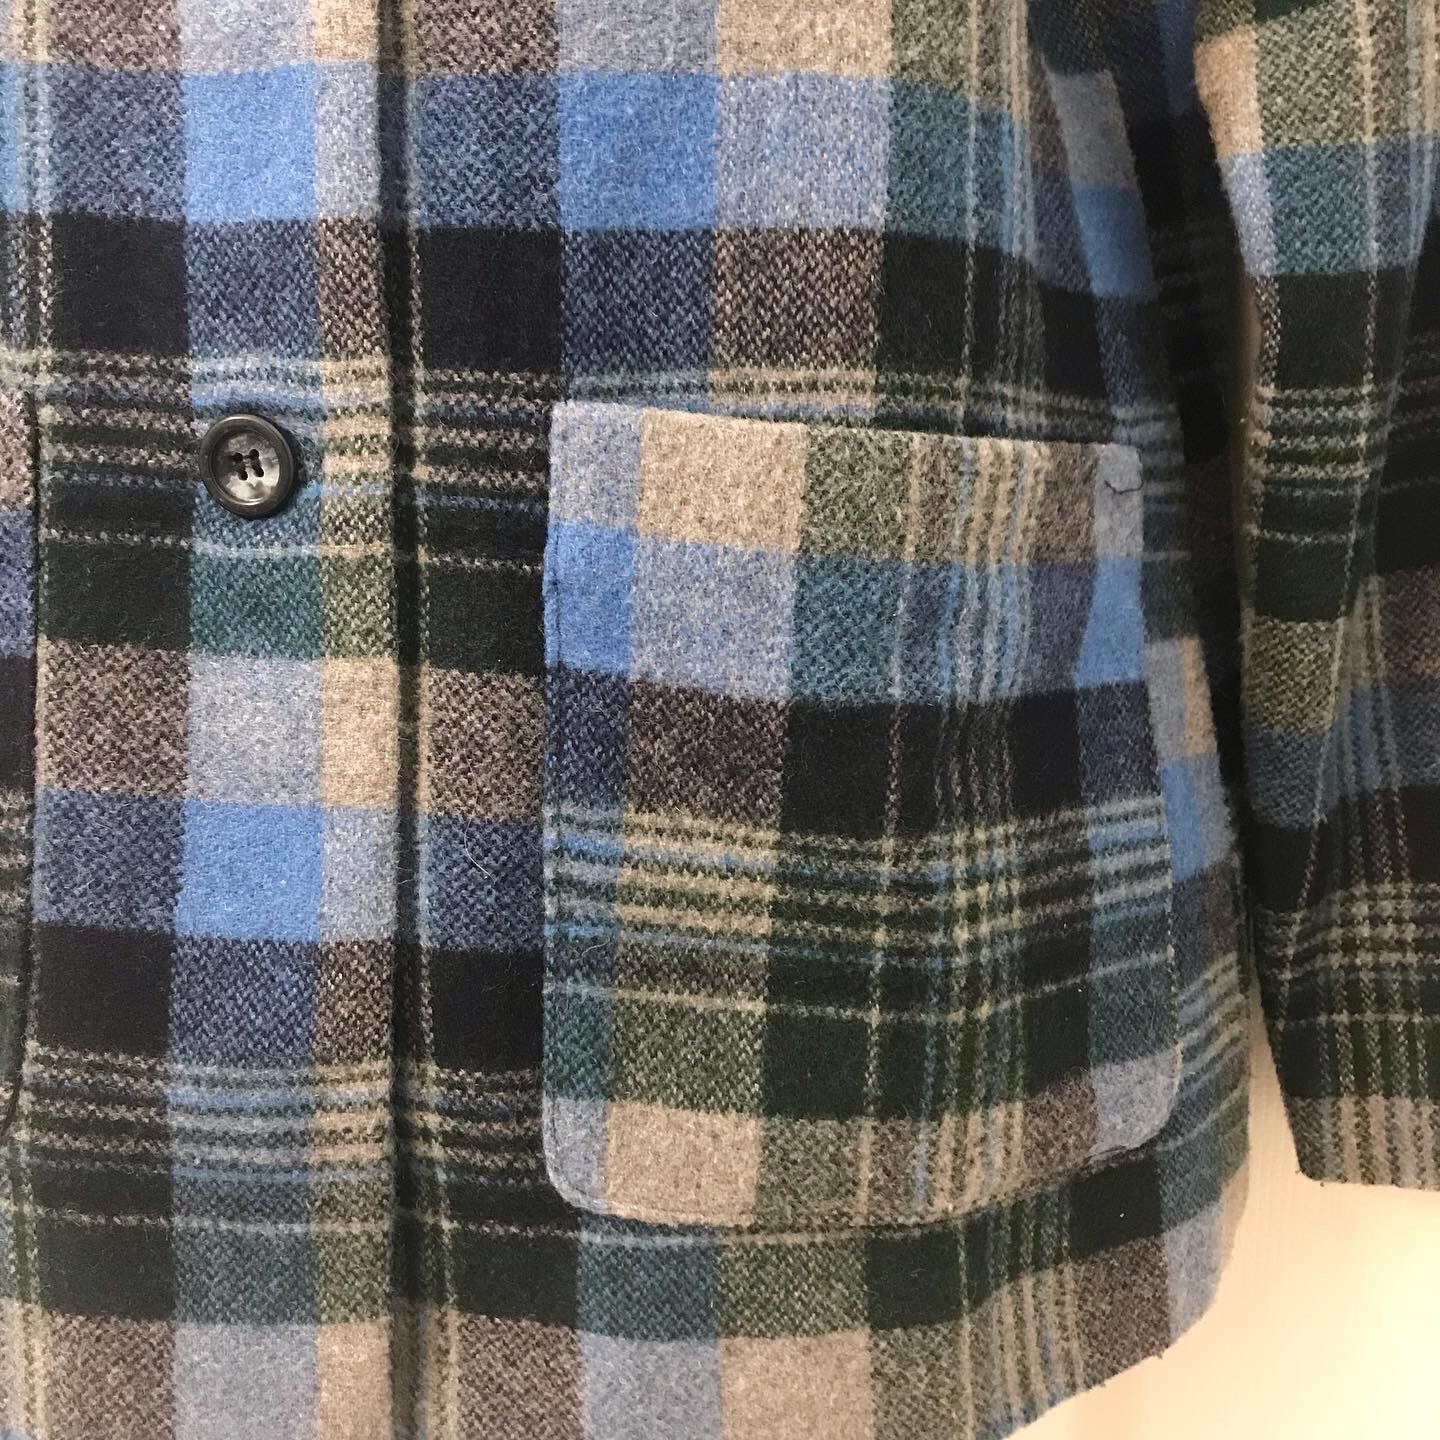 49er Pendleton style jacket Italian wool blend made in USA | Etsy